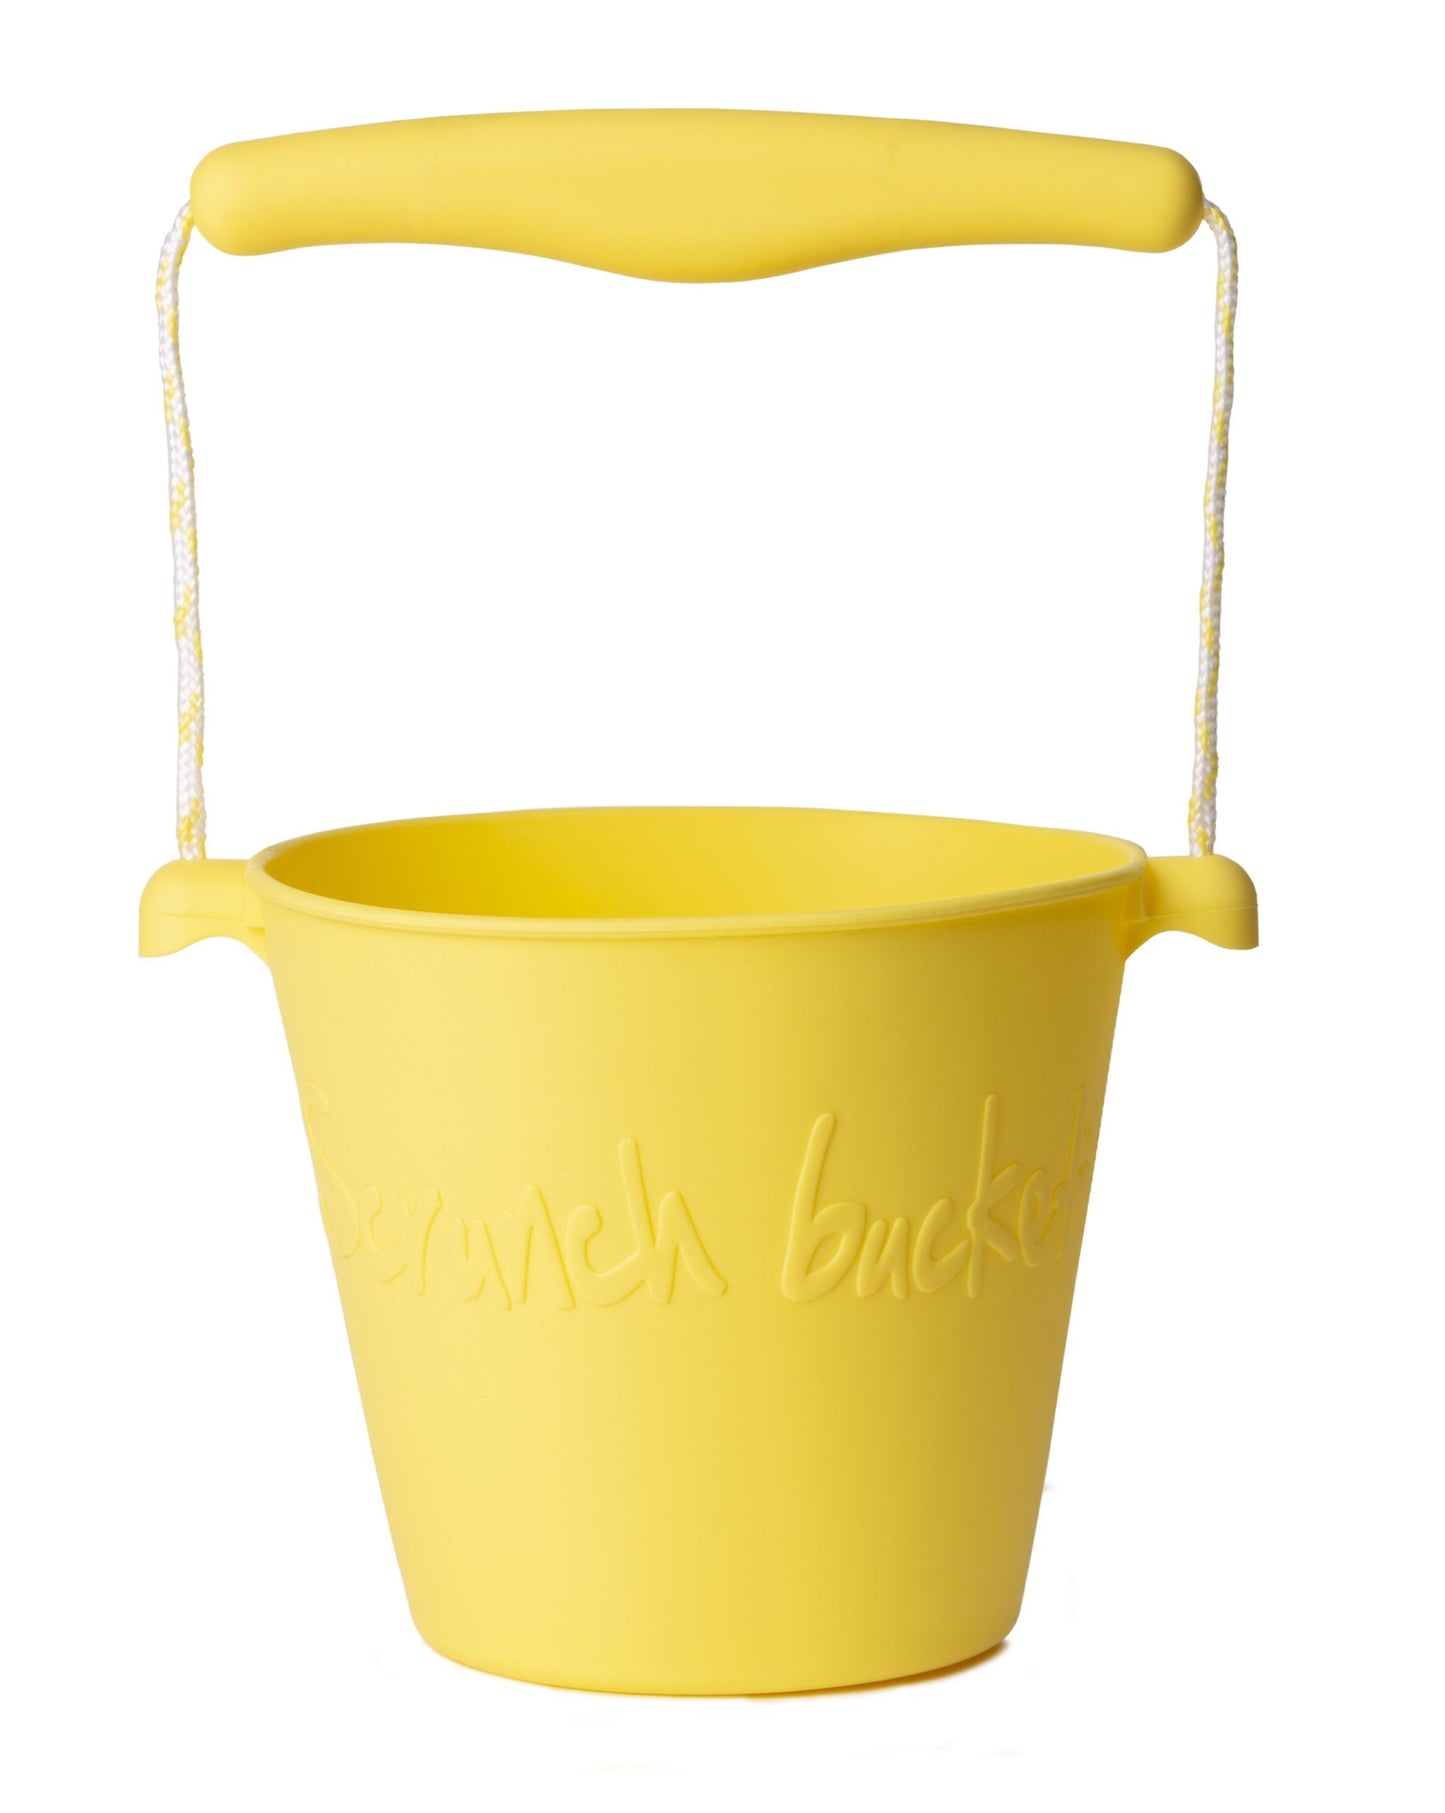 Scrunch Buckets